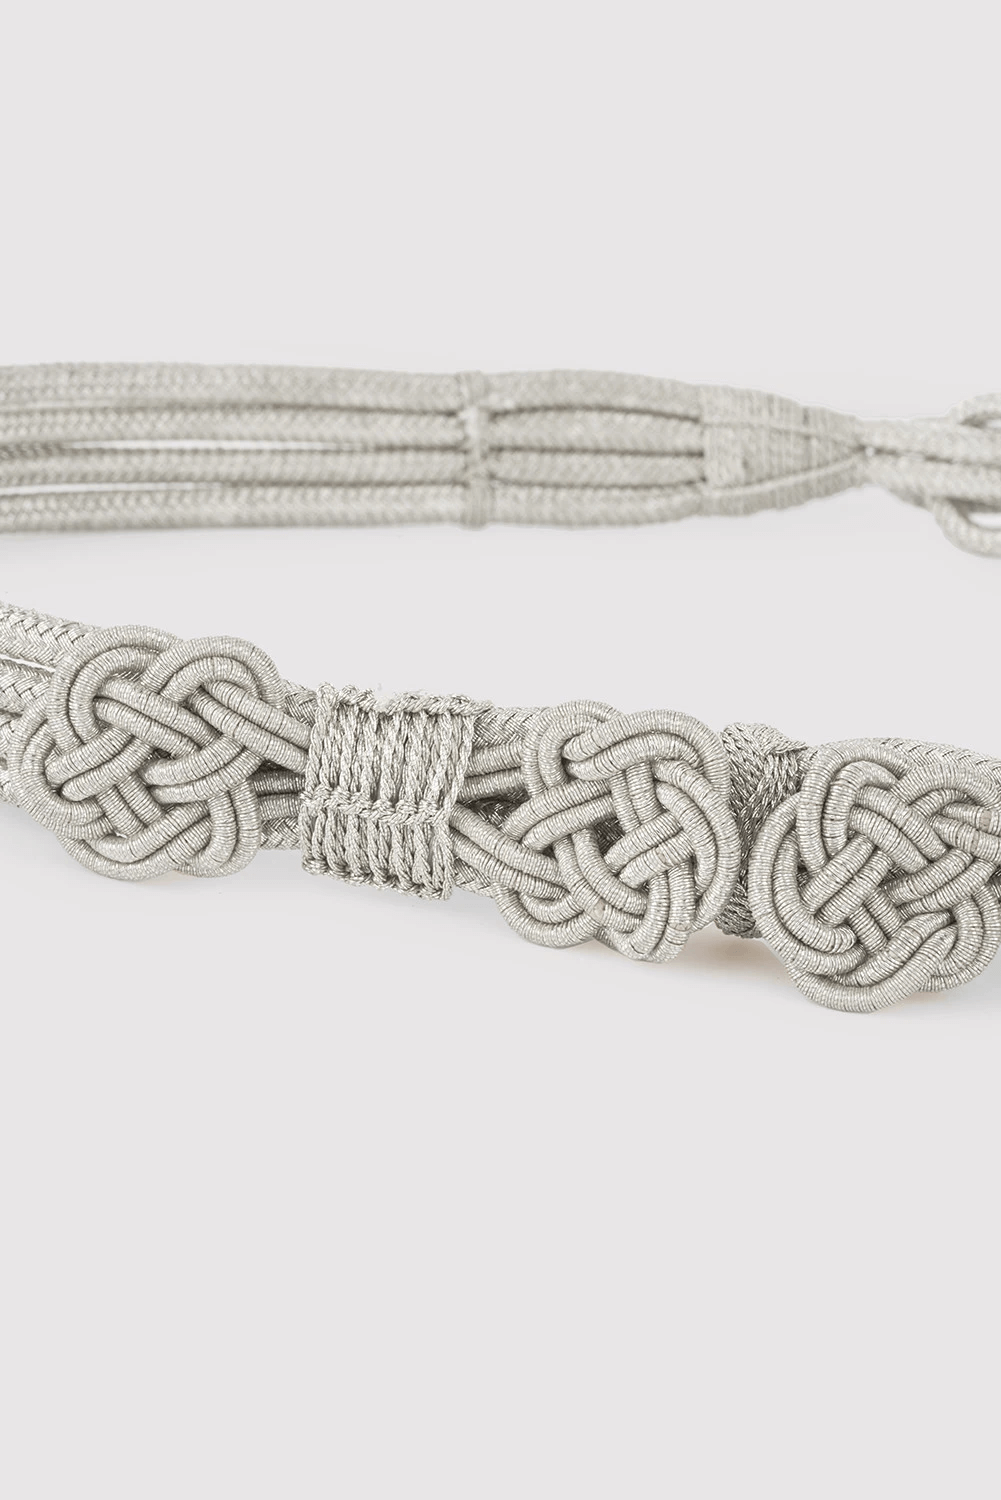 Lara Metallic Braided Rope Non-Leather Belt in Silver